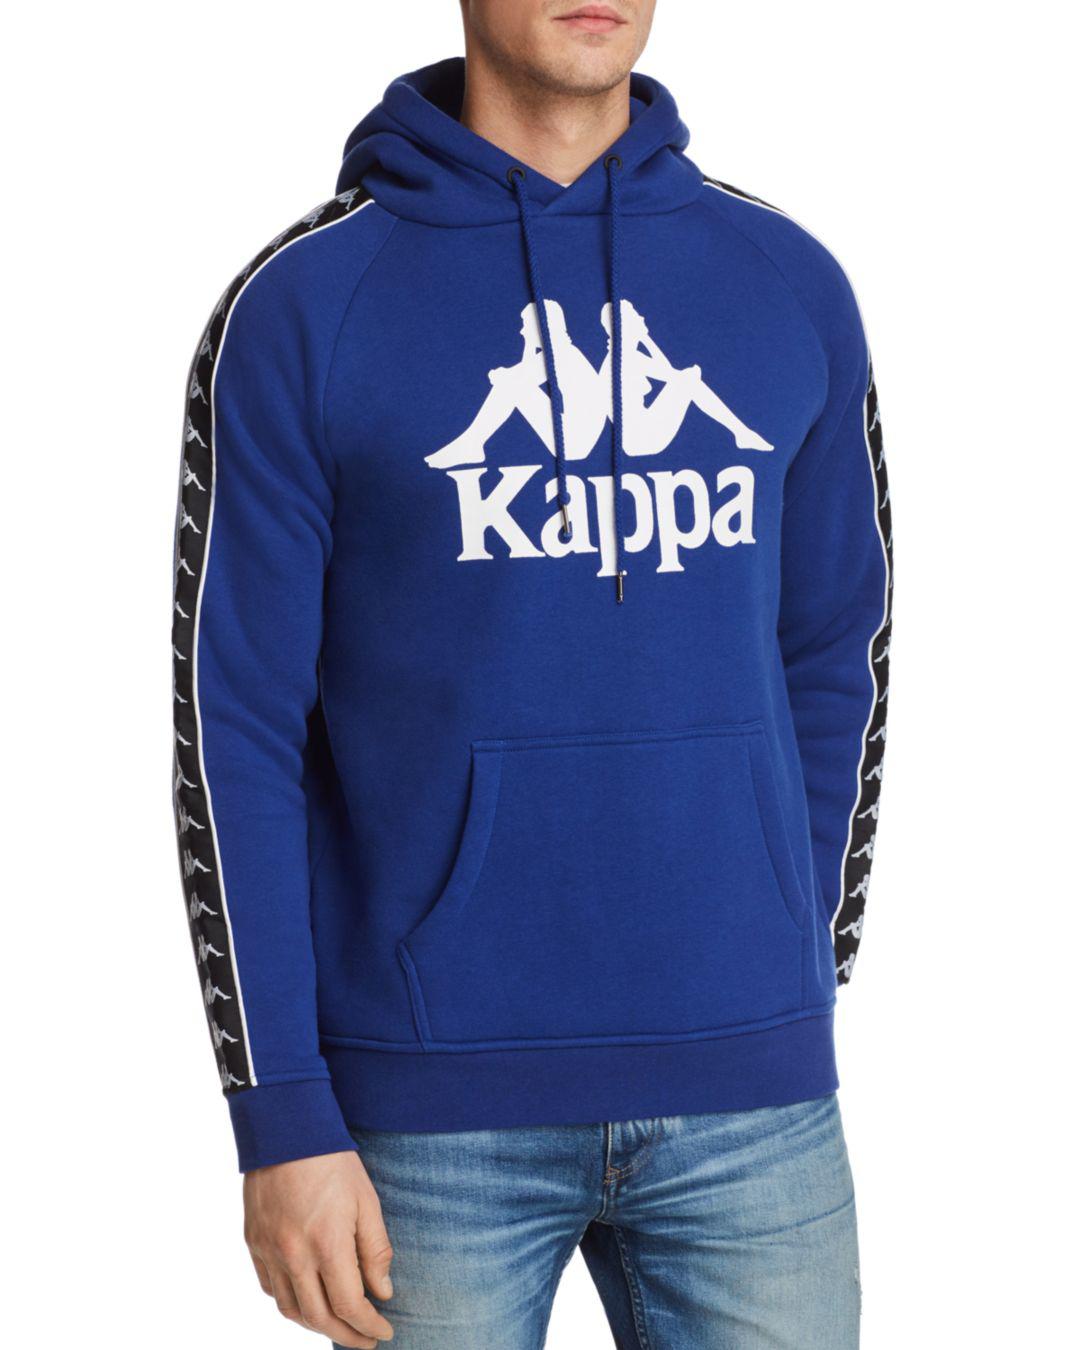 Kappa Hurtado Logo Hoodie in Blue - Black (Blue) for Men - Lyst